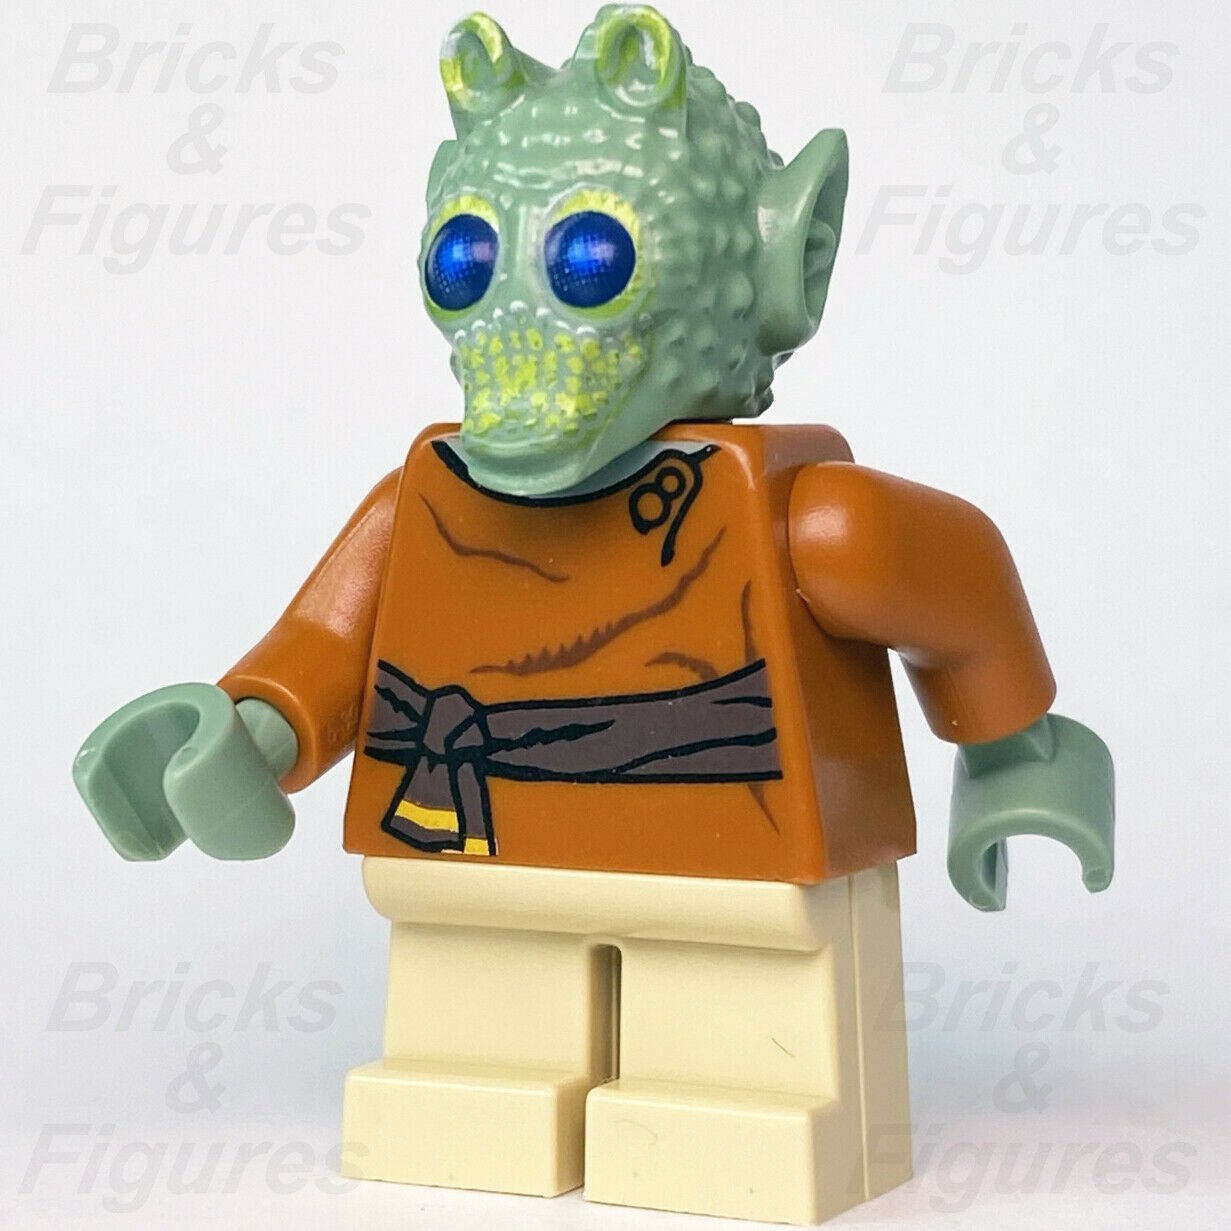 New Star Wars LEGO W. Wald Rodian Child The Phantom Menace Minifigure 7962 - Bricks & Figures